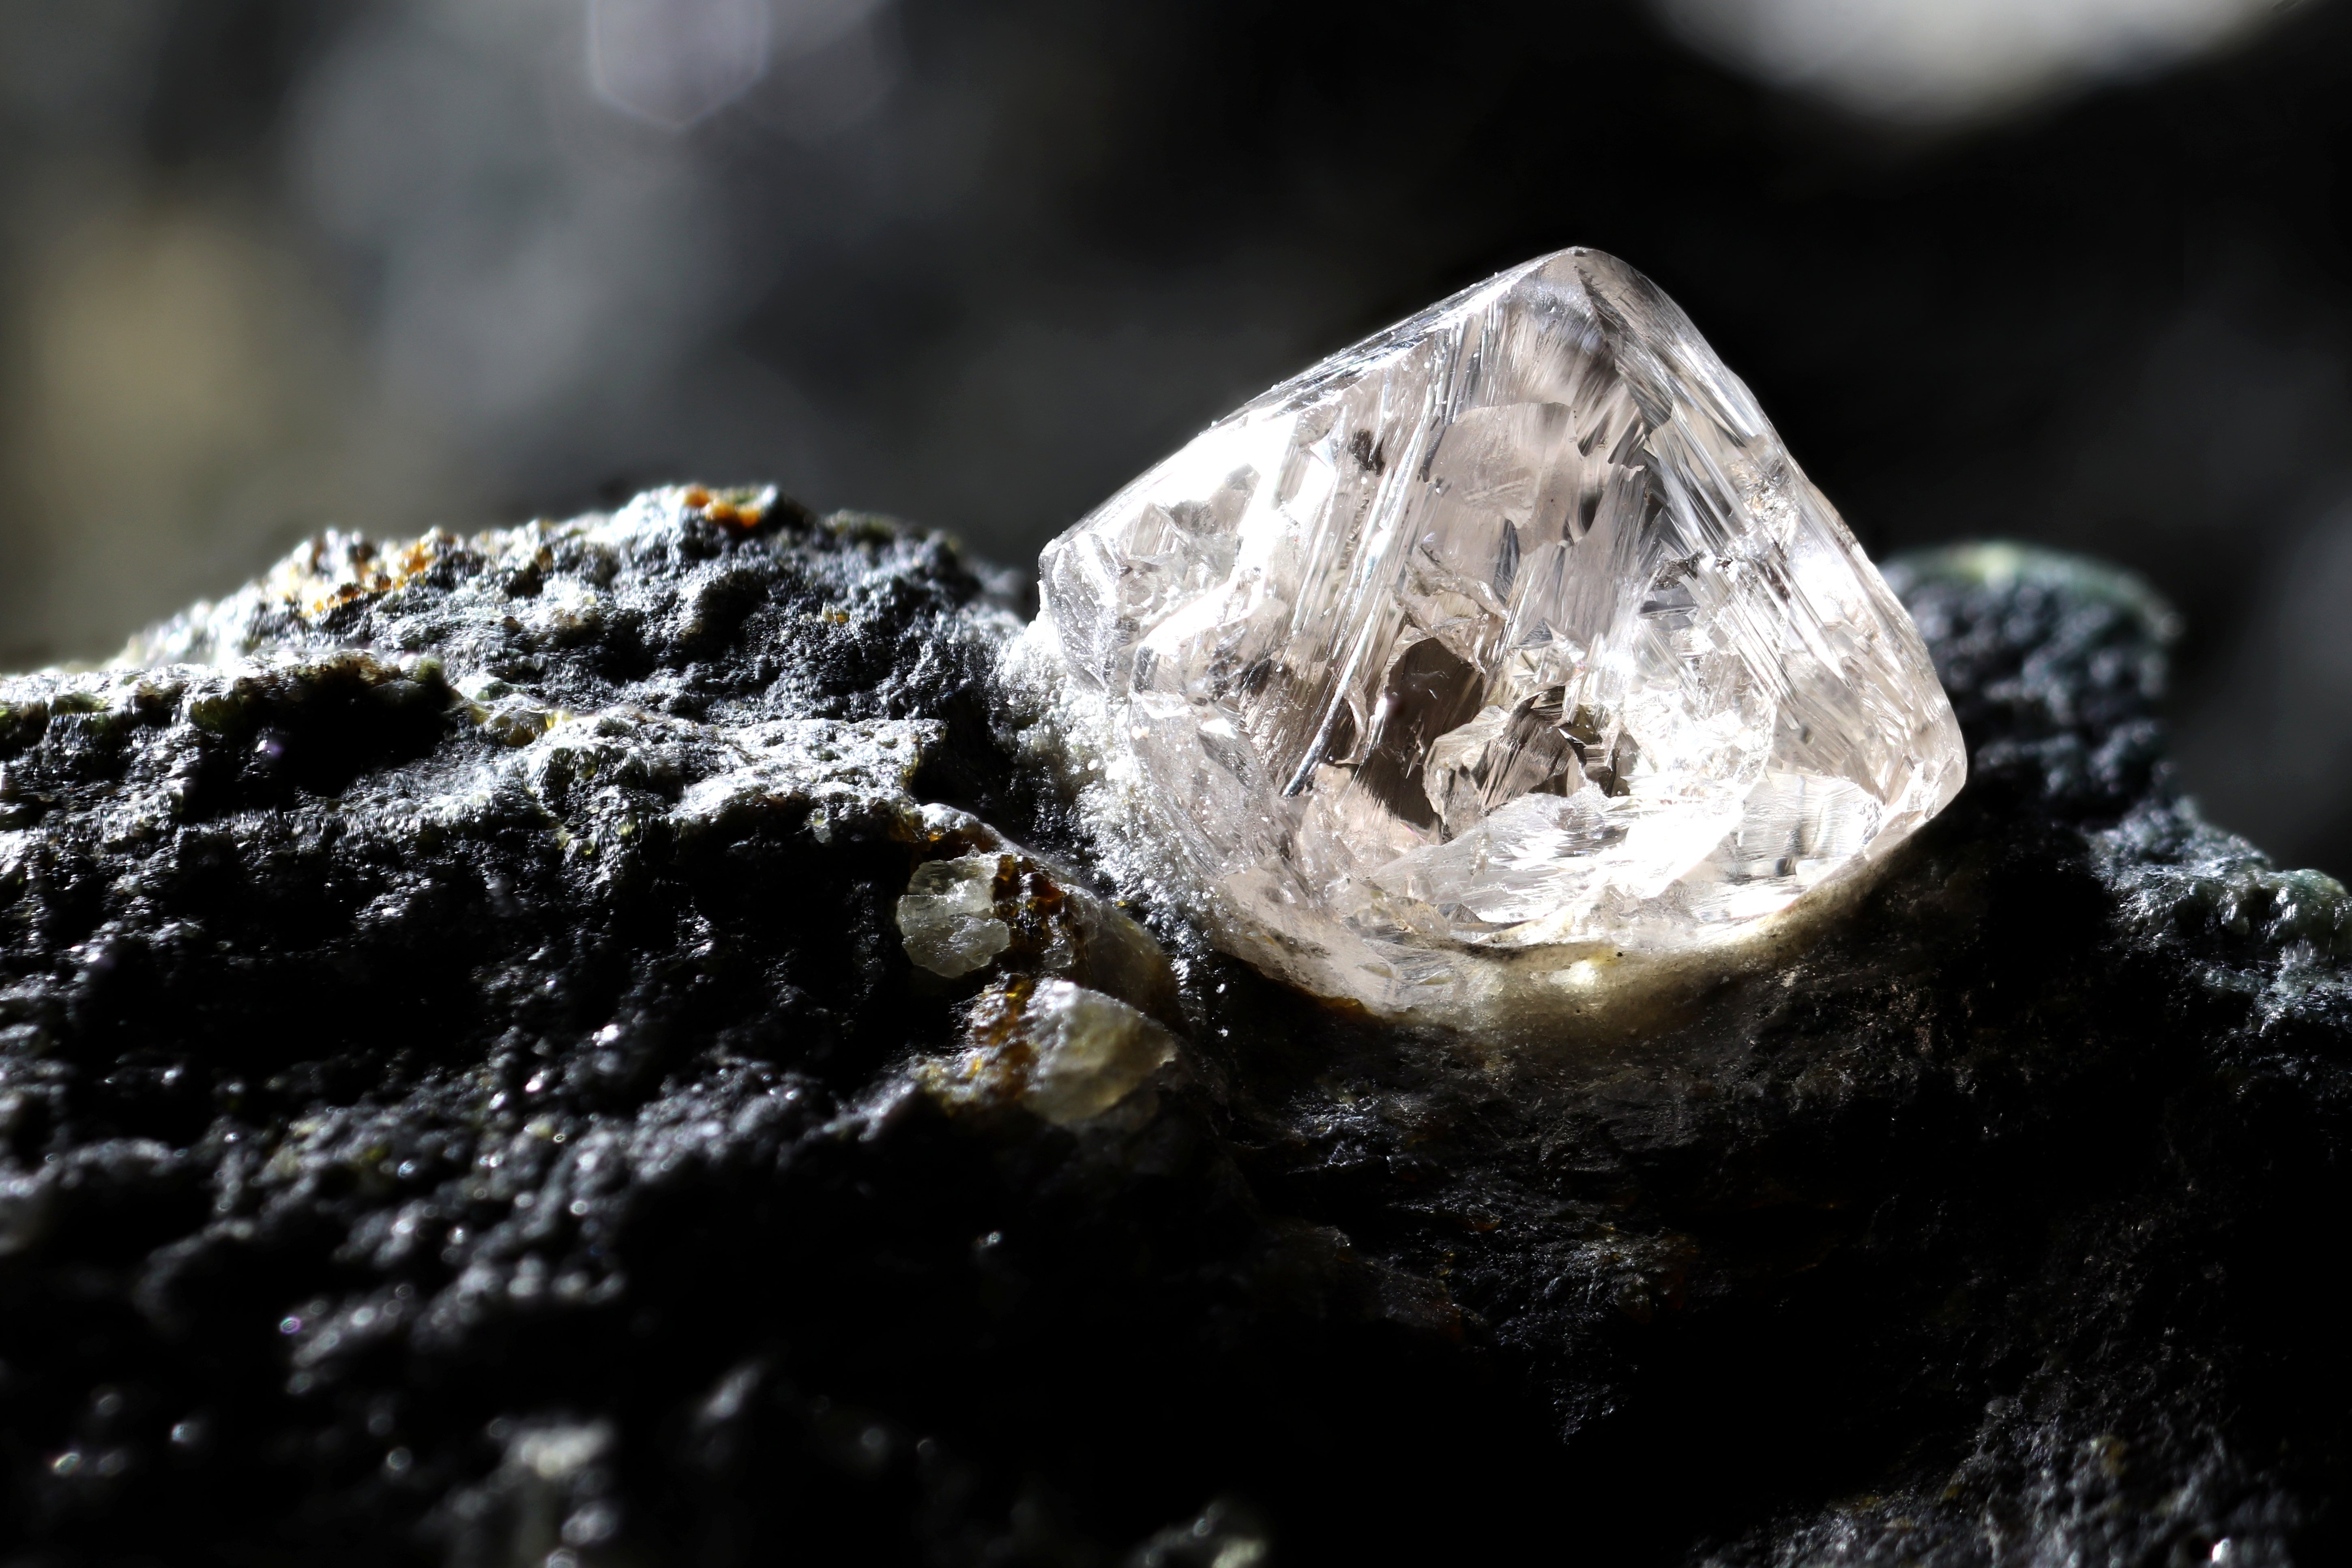 A natural diamond nestled in kimberlite | Source: Shutterstock